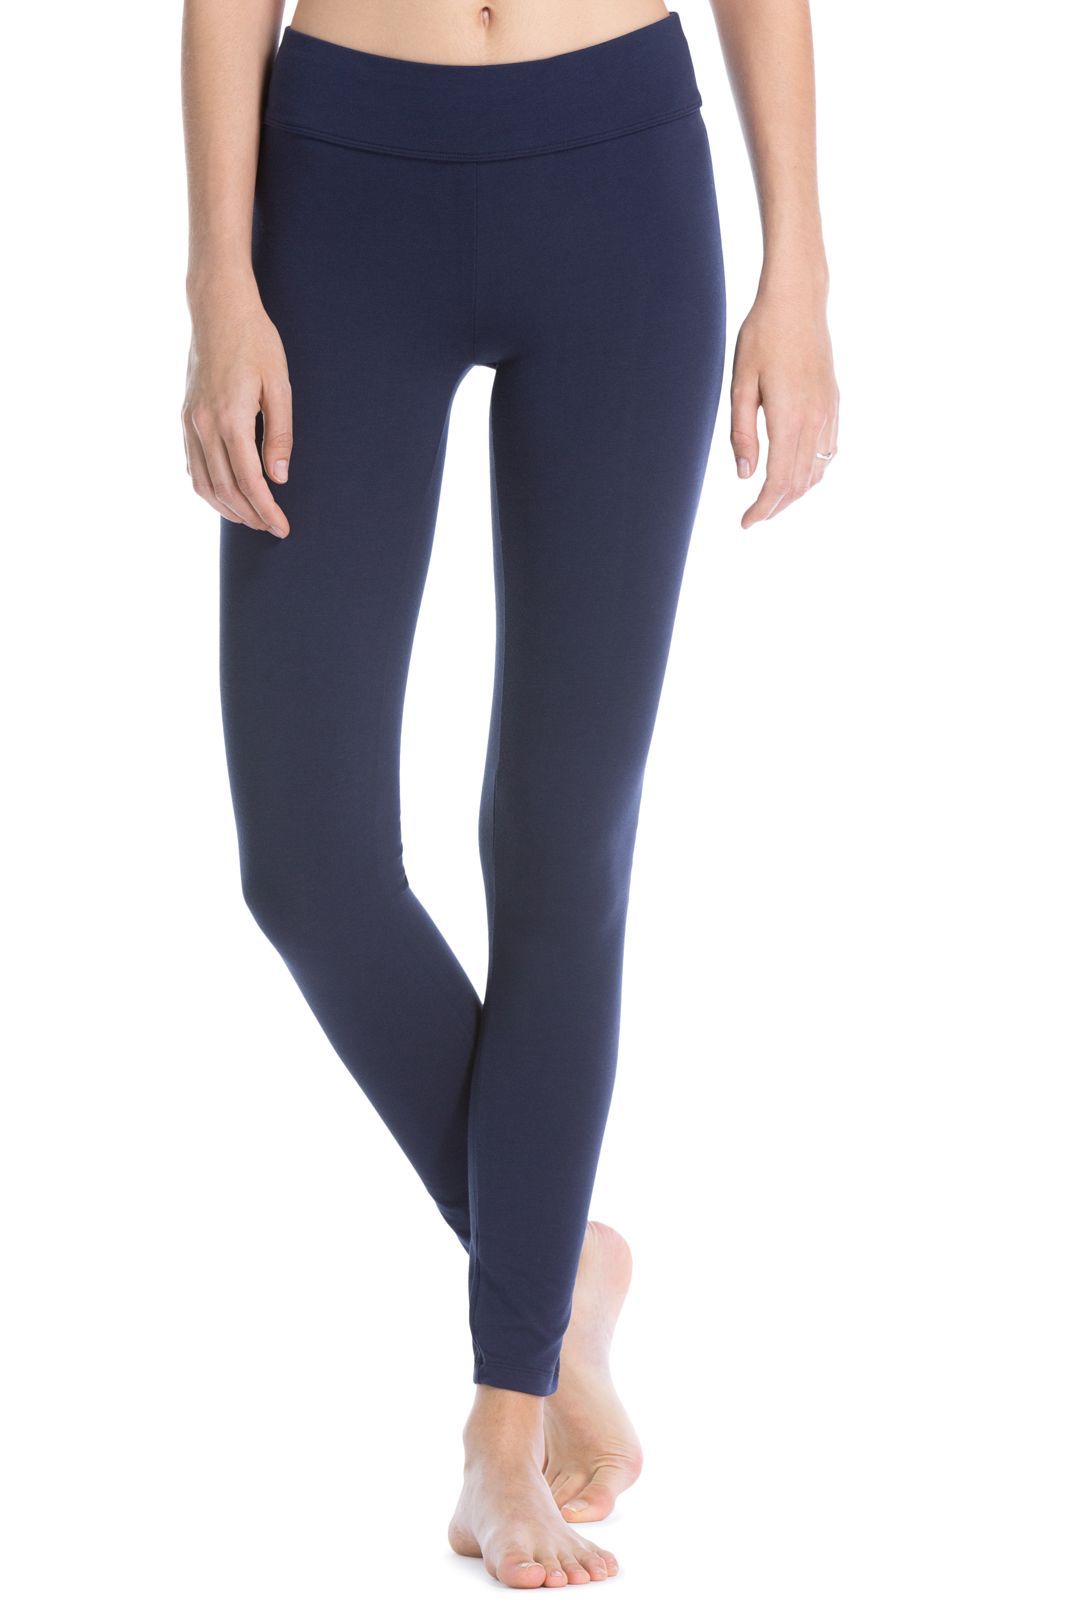 Outdoorweb.eu - Meridian Ankle Leg, purple - women's leggings - UNDER  ARMOUR - 46.85 € - outdoorové oblečení a vybavení shop